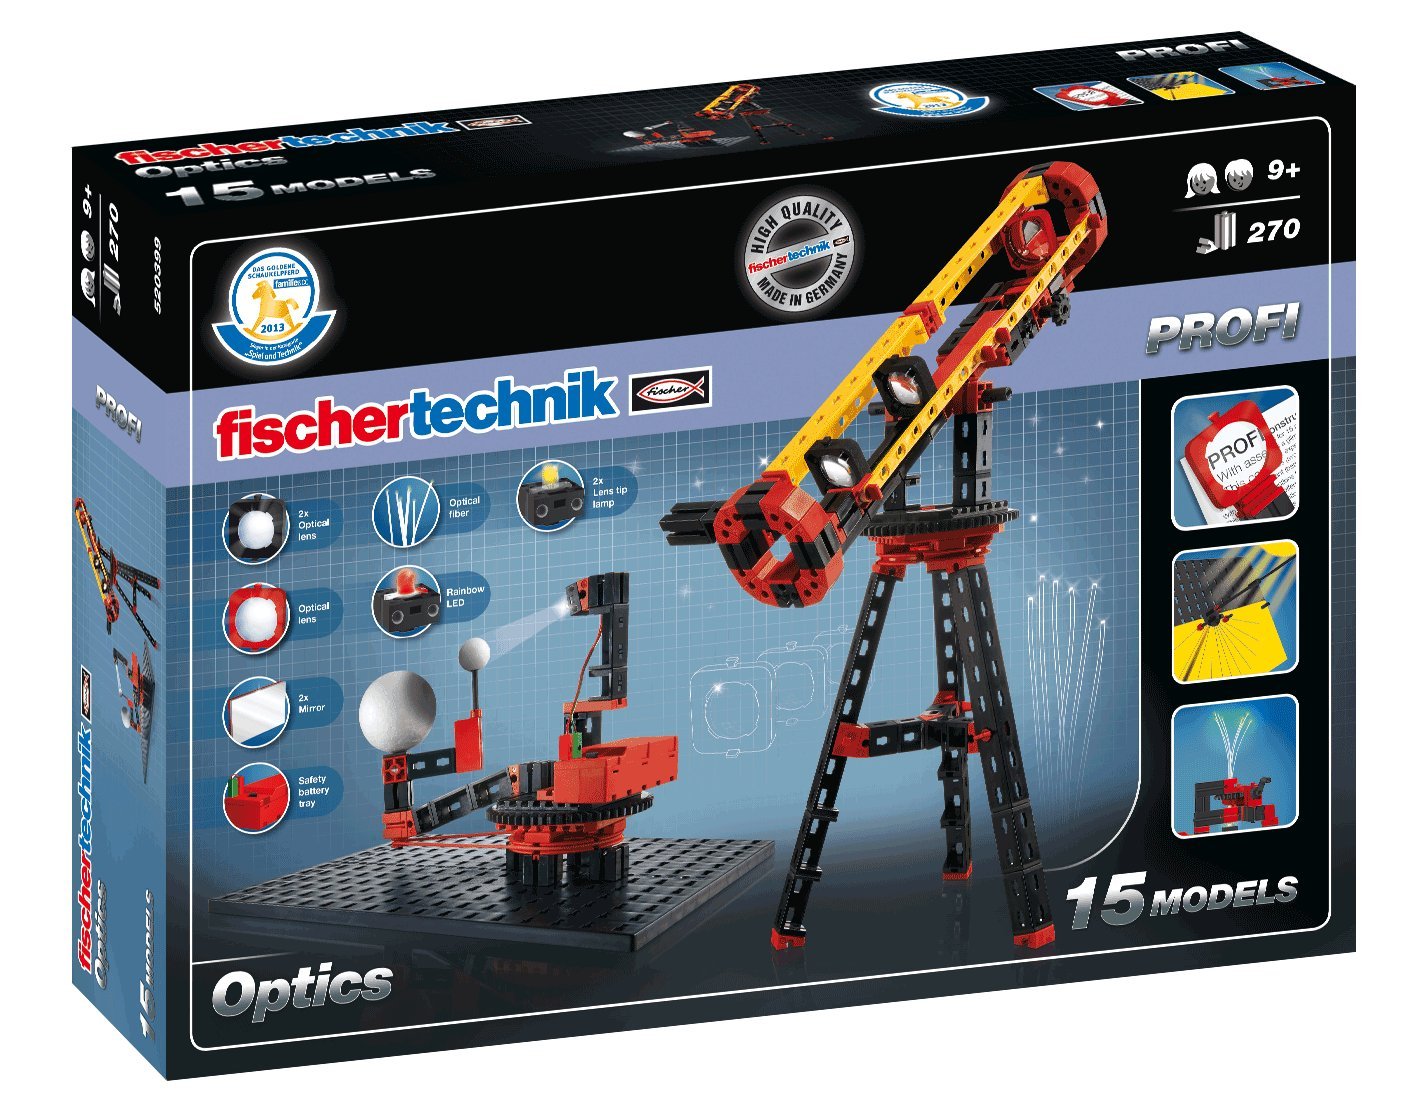 Fischertechnik 520399 Profi Optics Construction Set